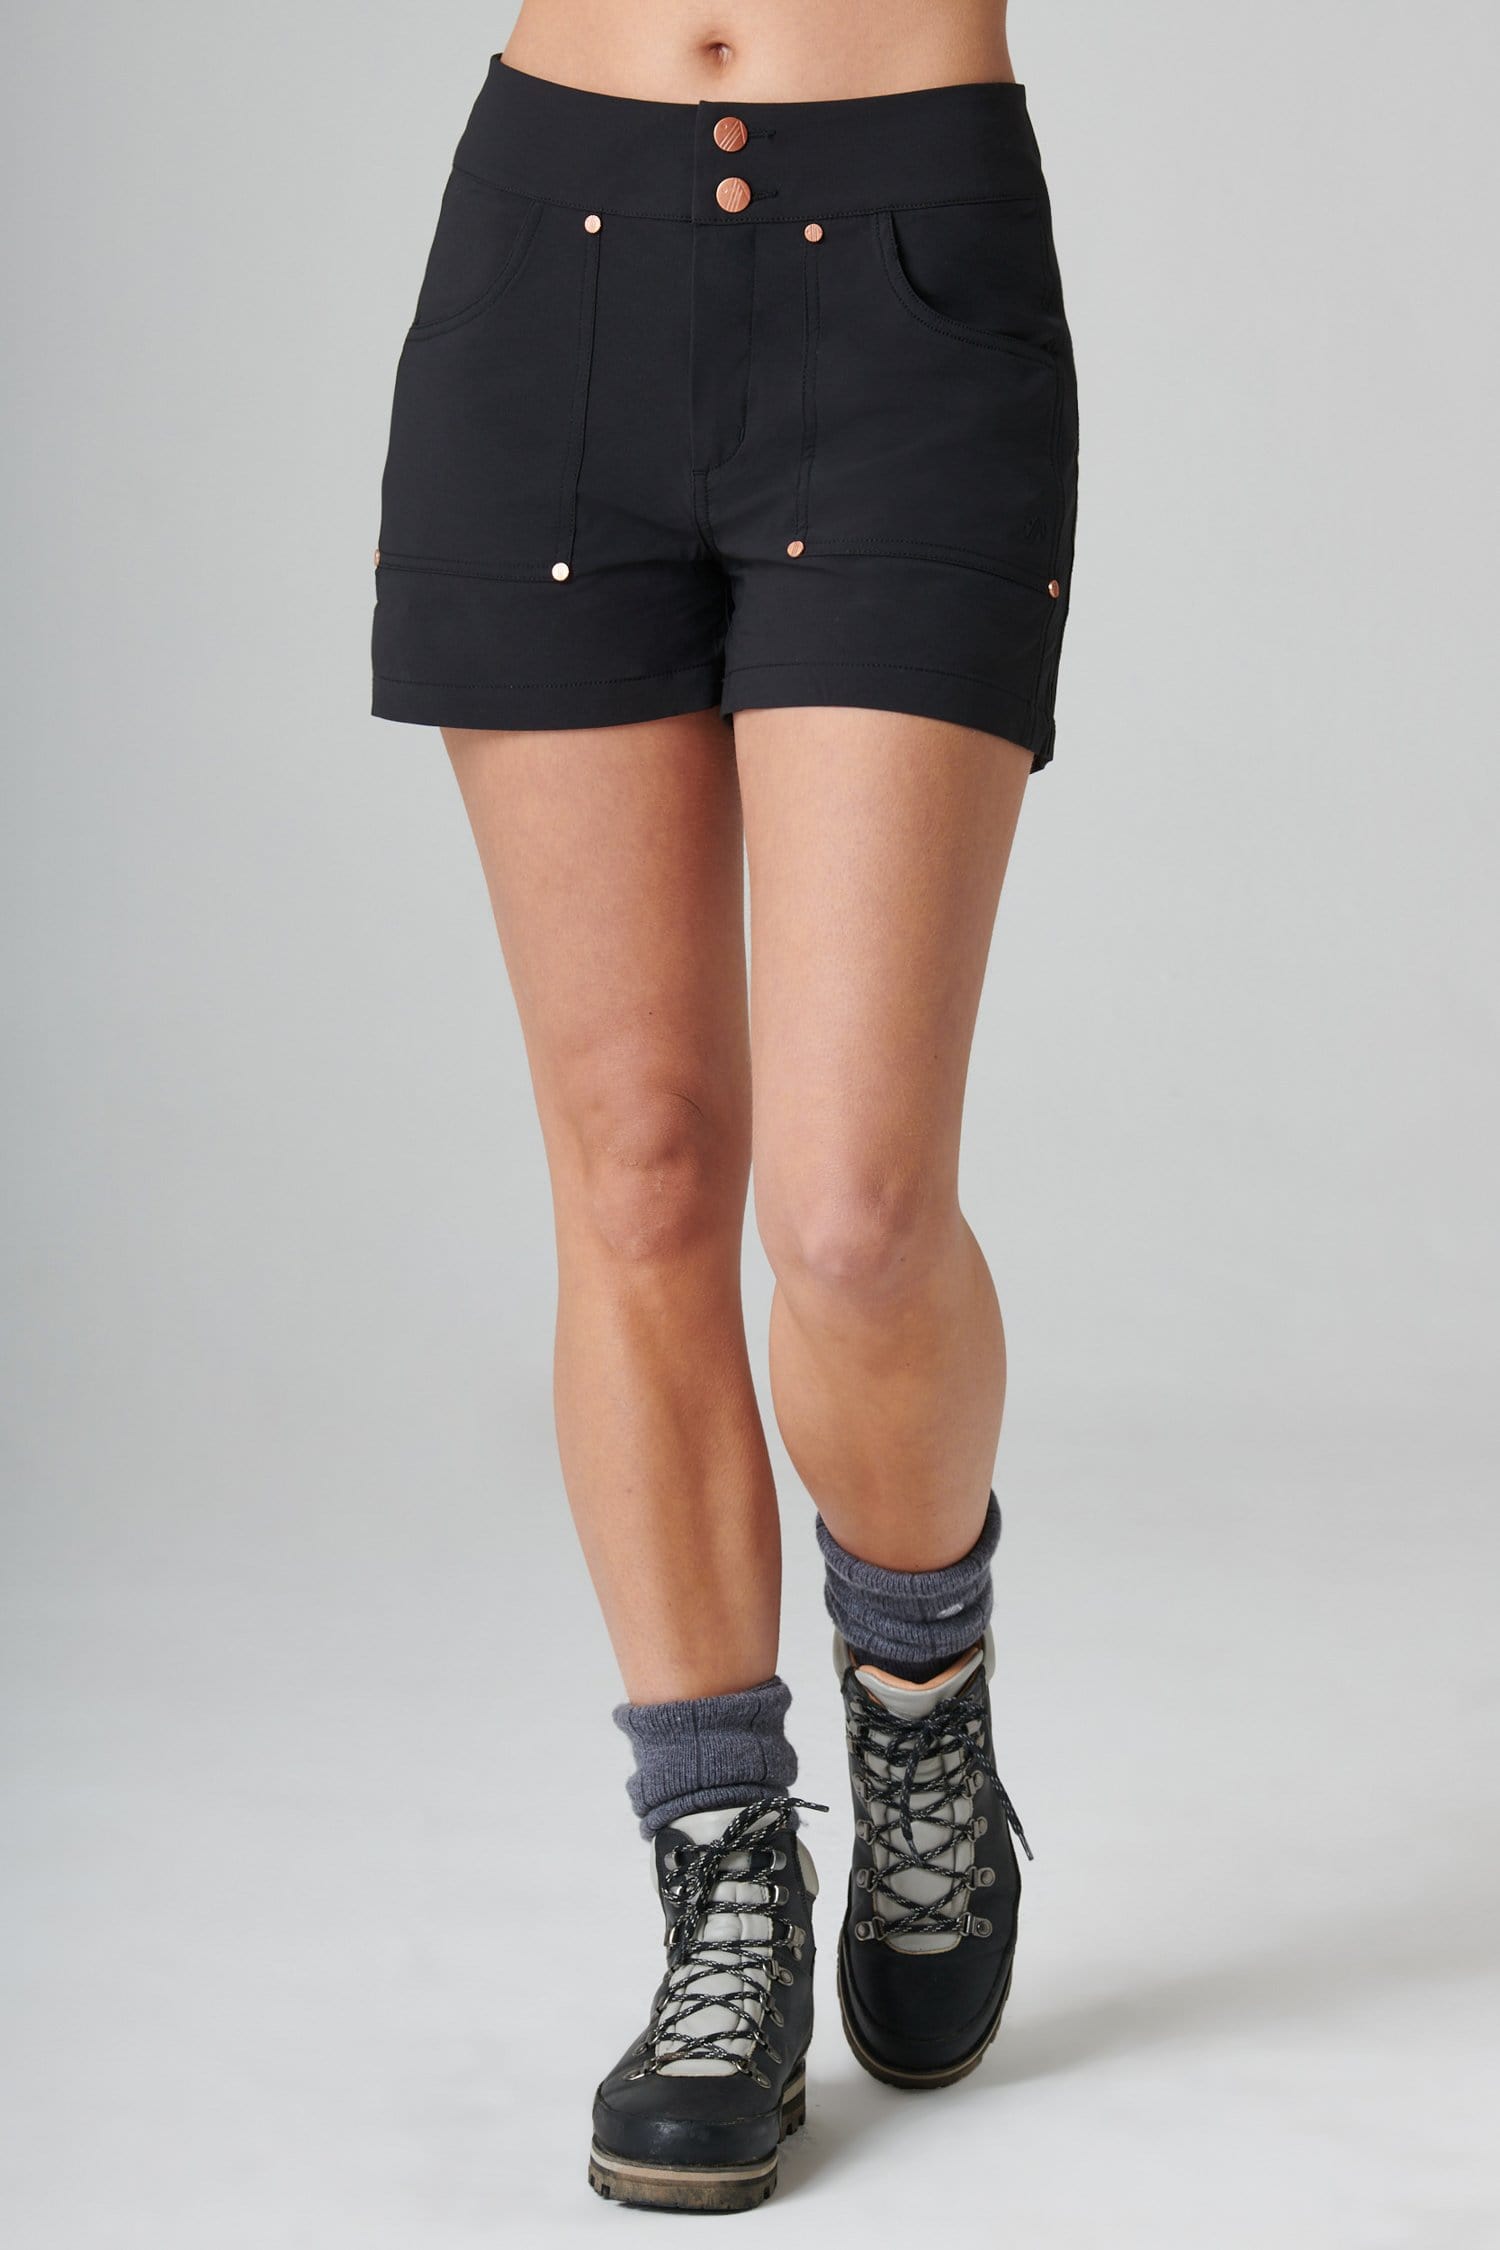 Trek Shorts - Black - 26 / Uk8 - Womens - Acai Outdoorwear